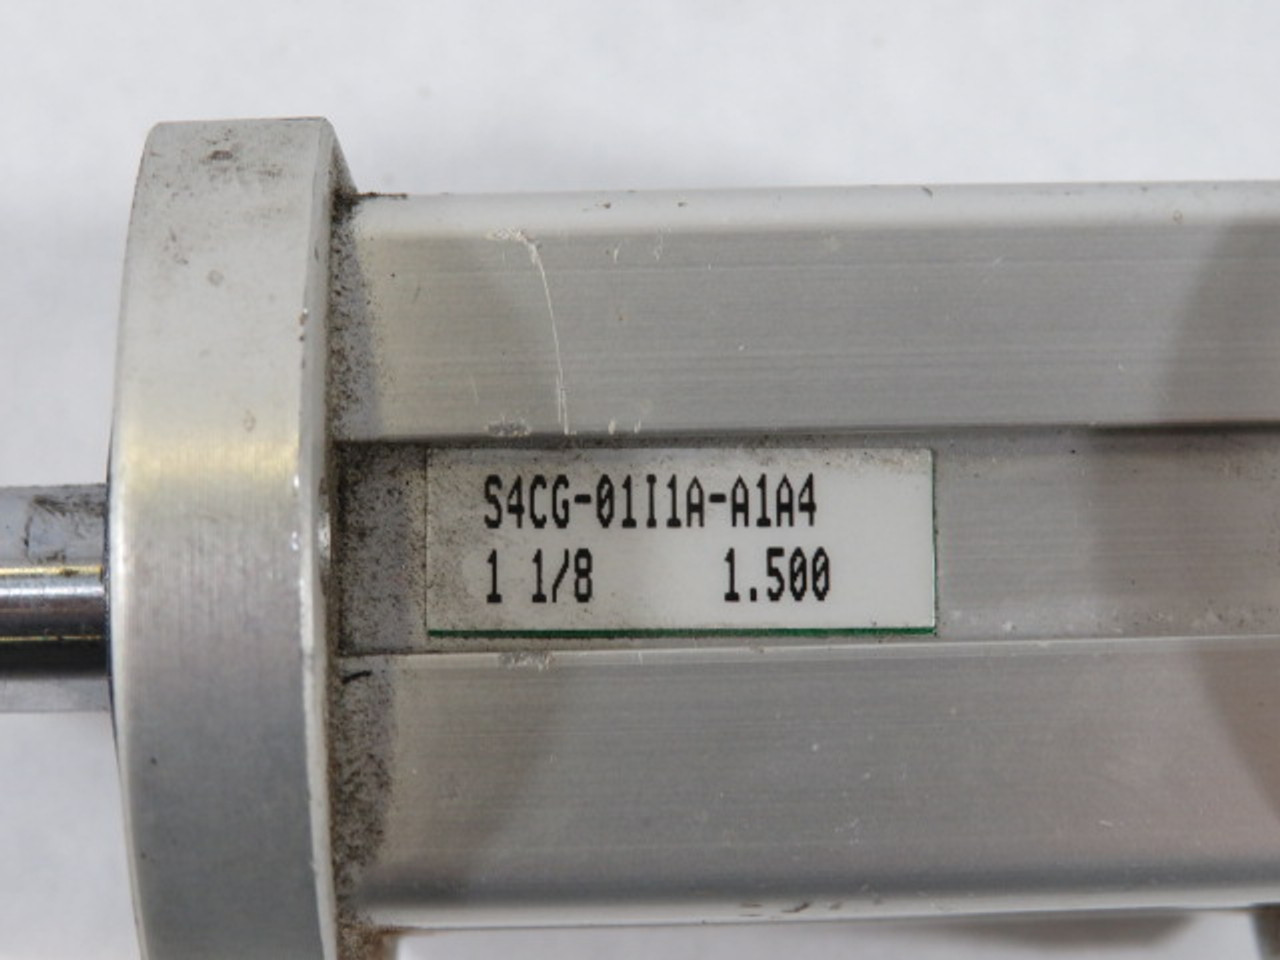 Numatics S4CG-01I1A-A1A4 Pneumatic Cylinder 1-1/8” Bore 1.500” Stroke USED